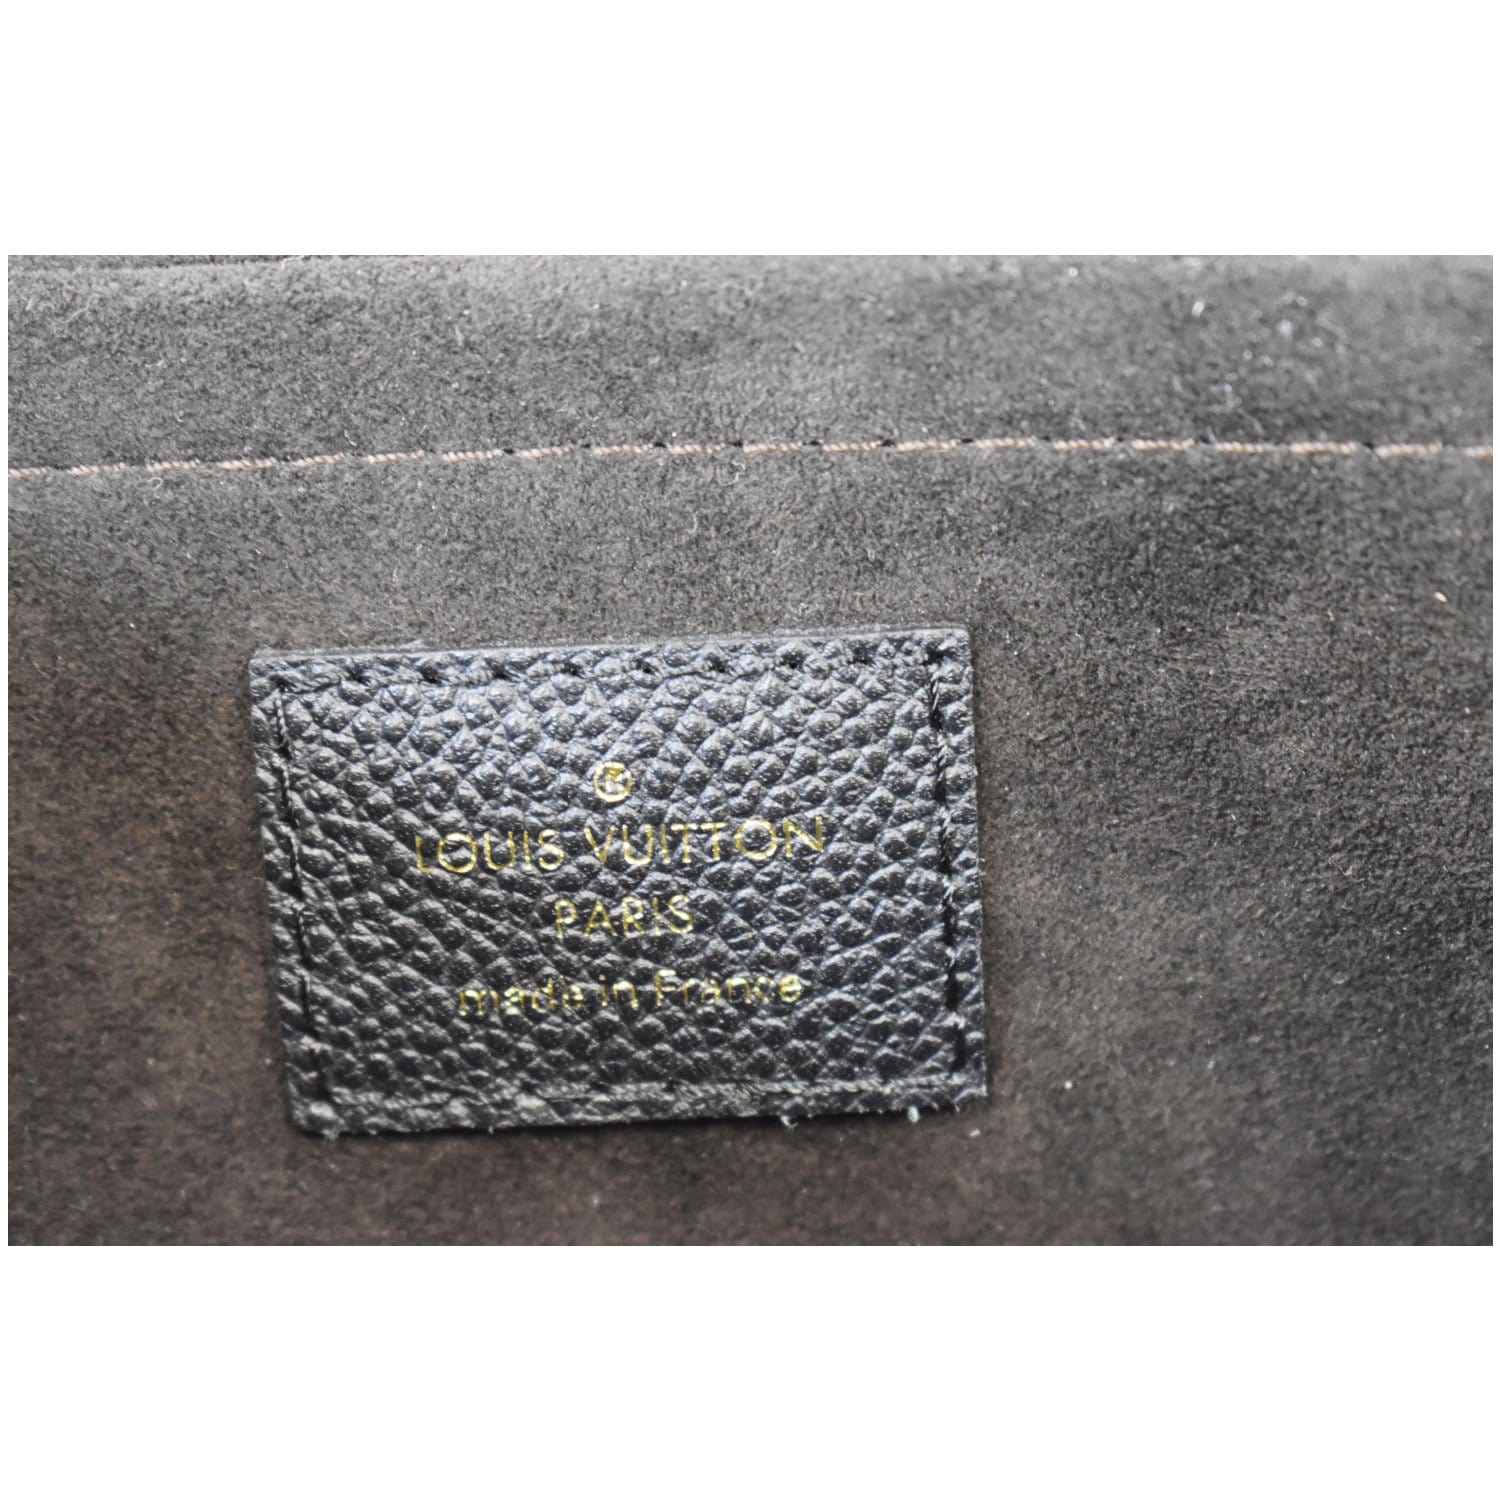 Louis Vuitton Empreinte Trocadero Black - THE PURSE AFFAIR